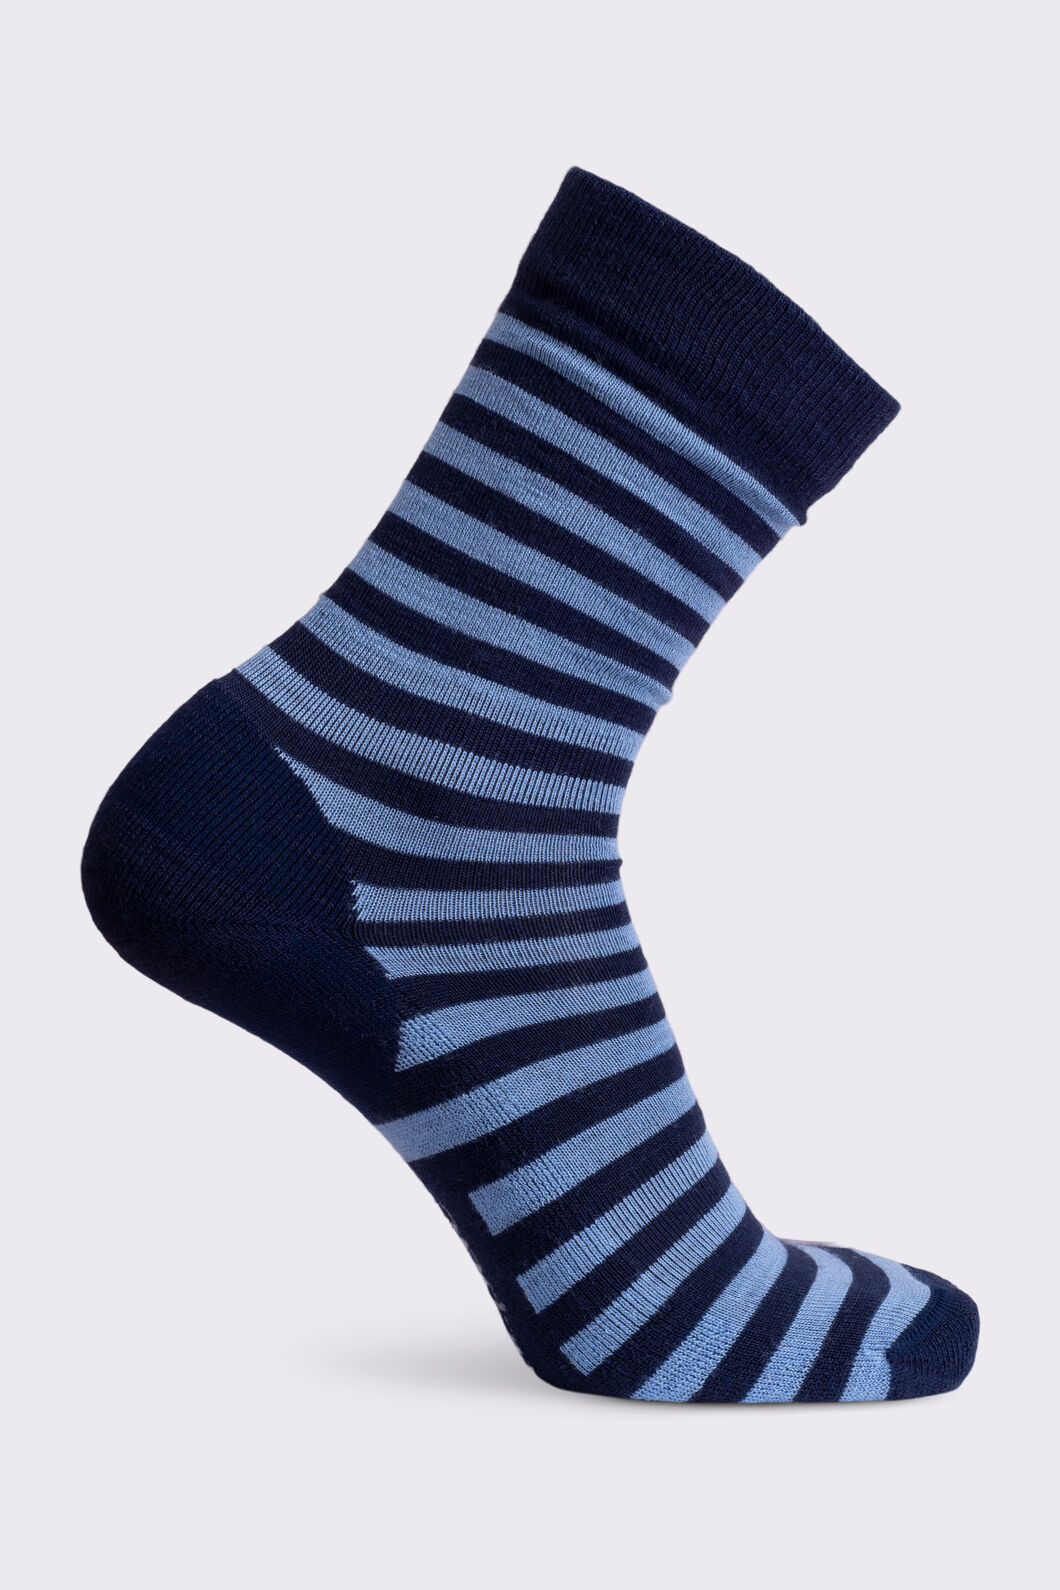 Macpac Merino Blend Footprint Socks | Macpac